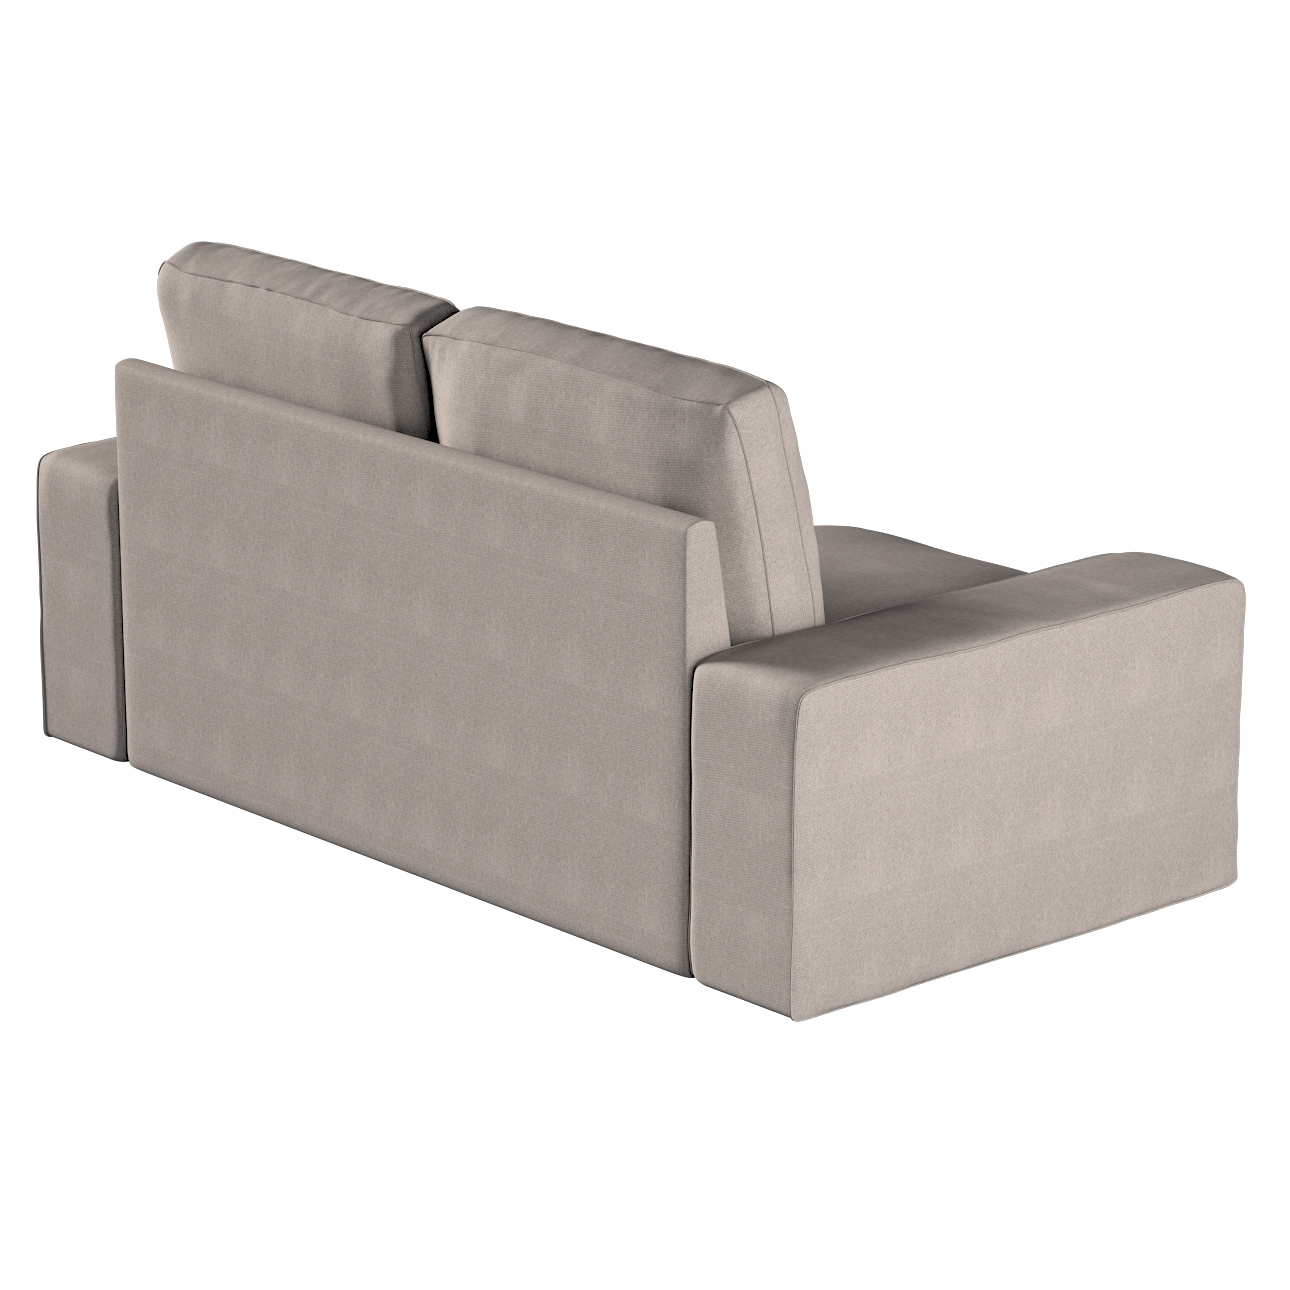 Bezug für Kivik 2-Sitzer Sofa, beige-grau, Bezug für Sofa Kivik 2-Sitzer, E günstig online kaufen